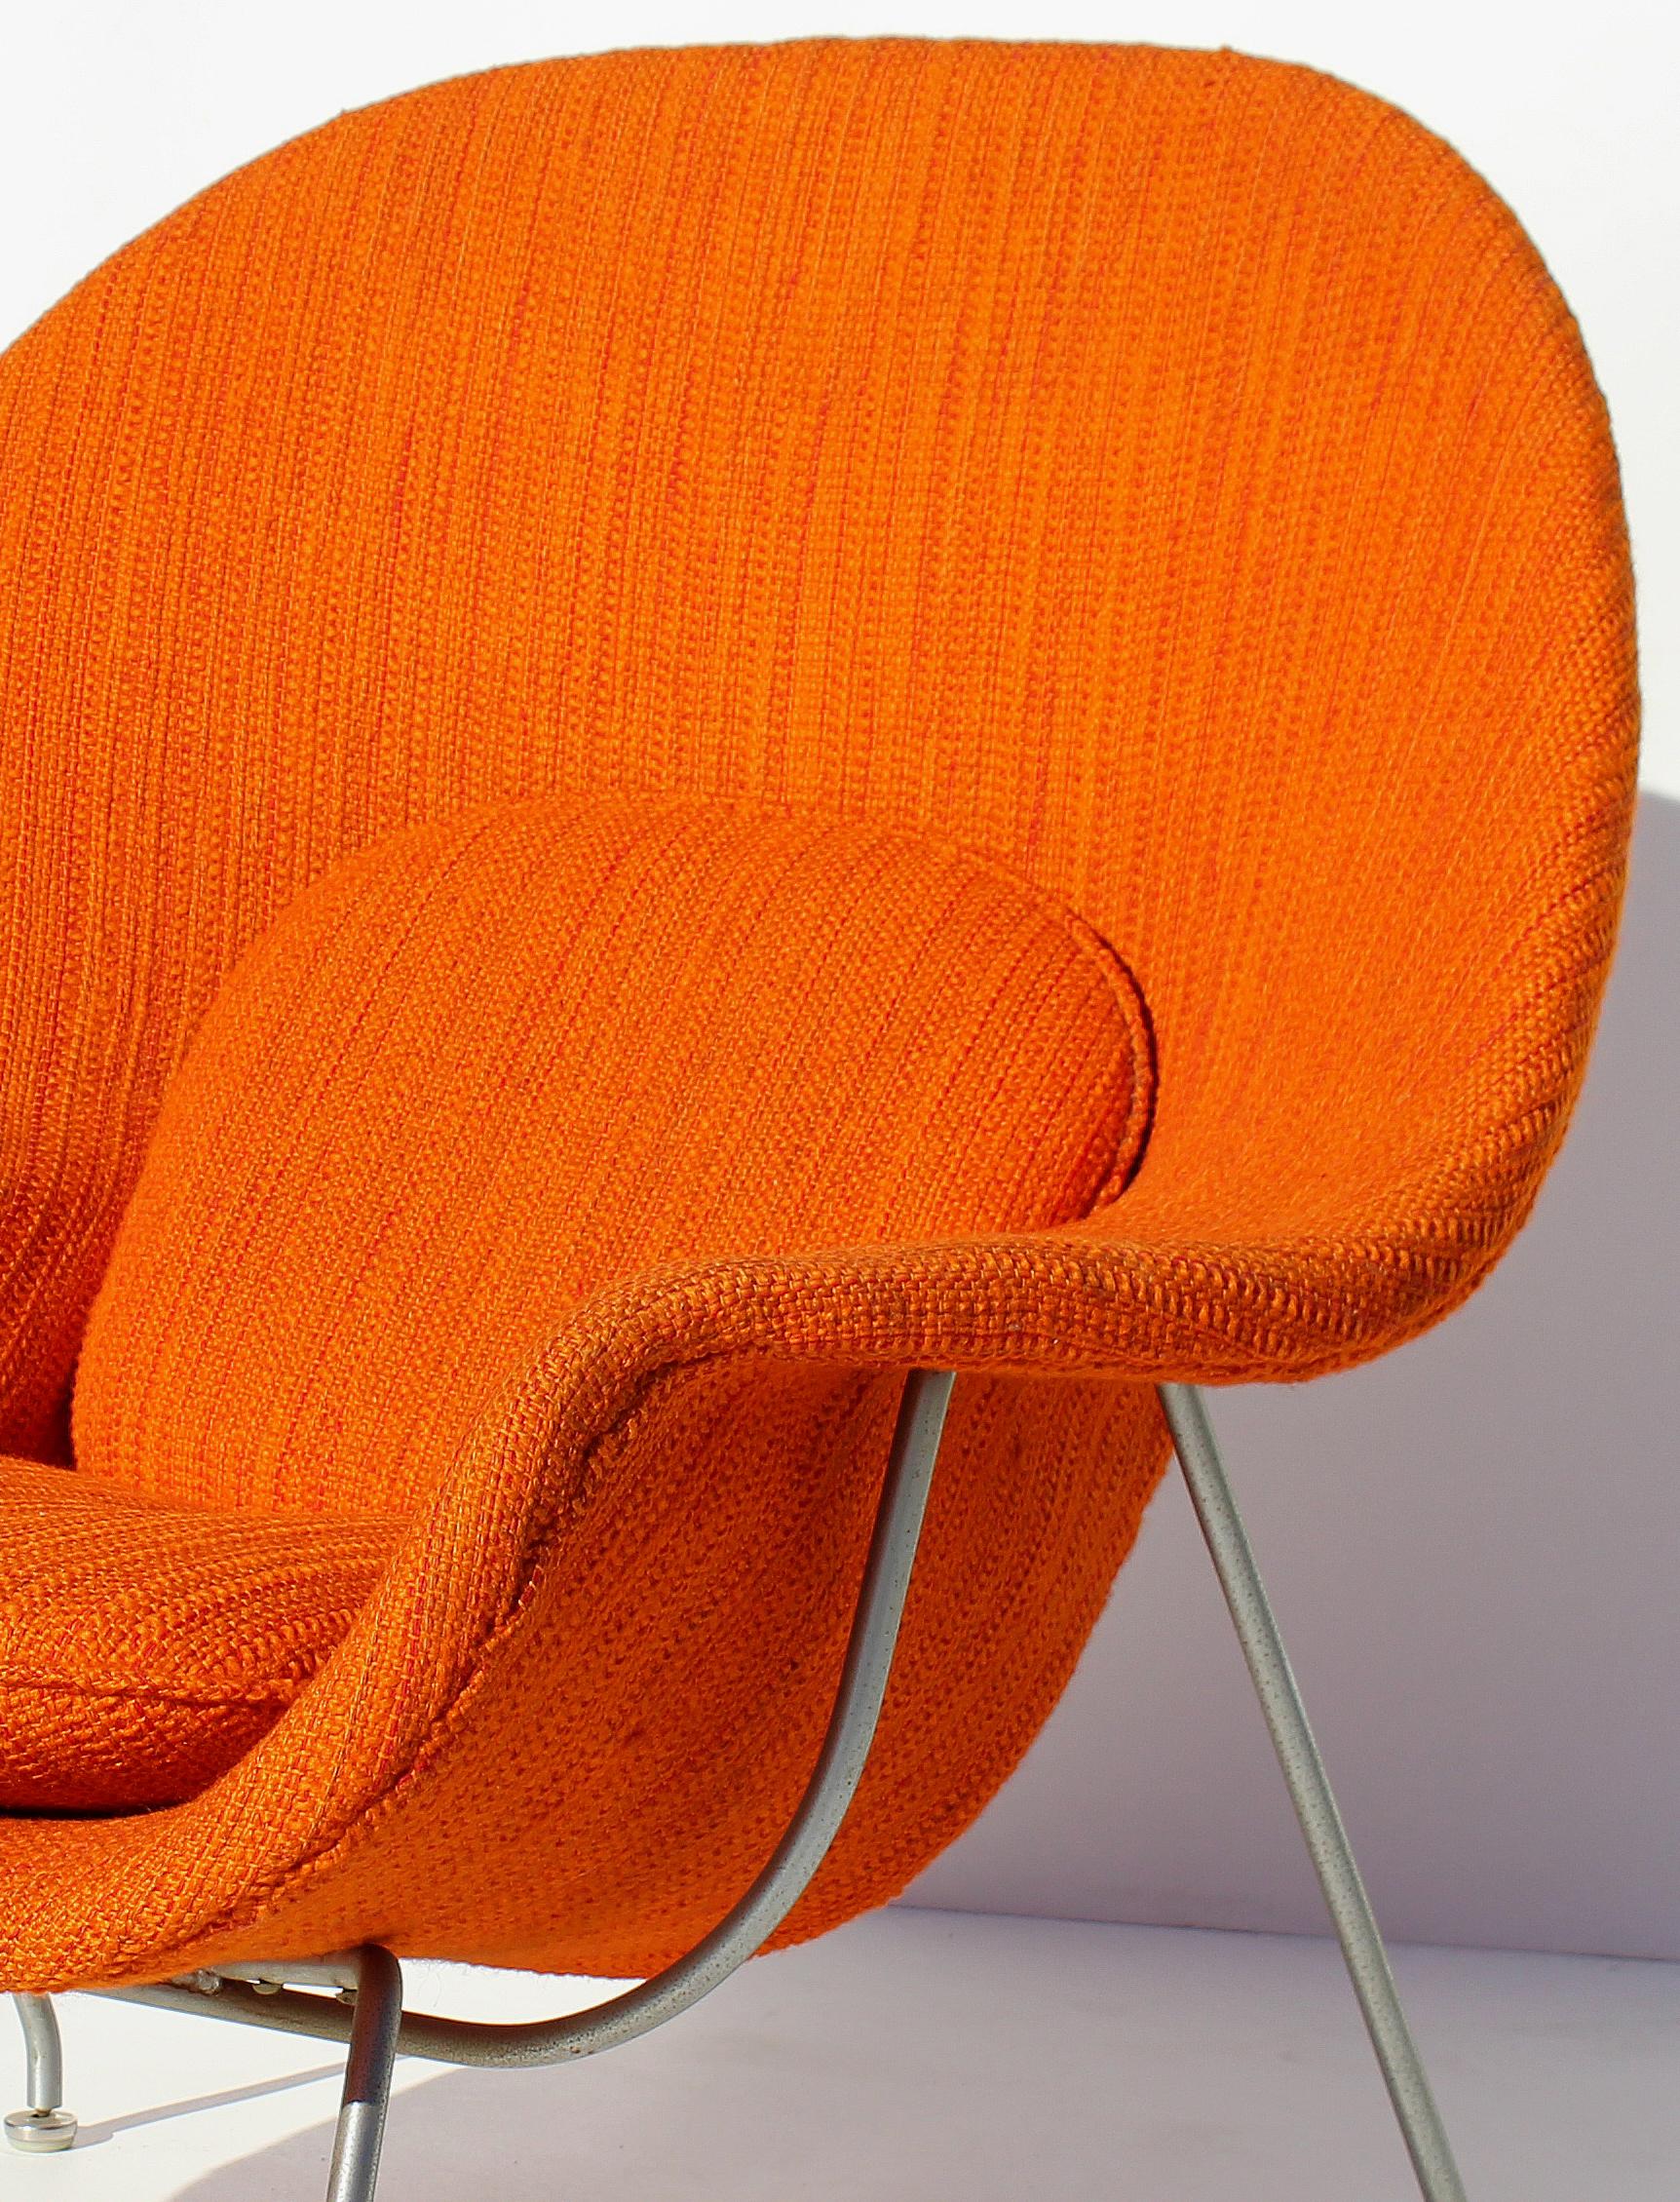 American Eero Saarinen Womb Chair with Original Upholstery and Steel Frame